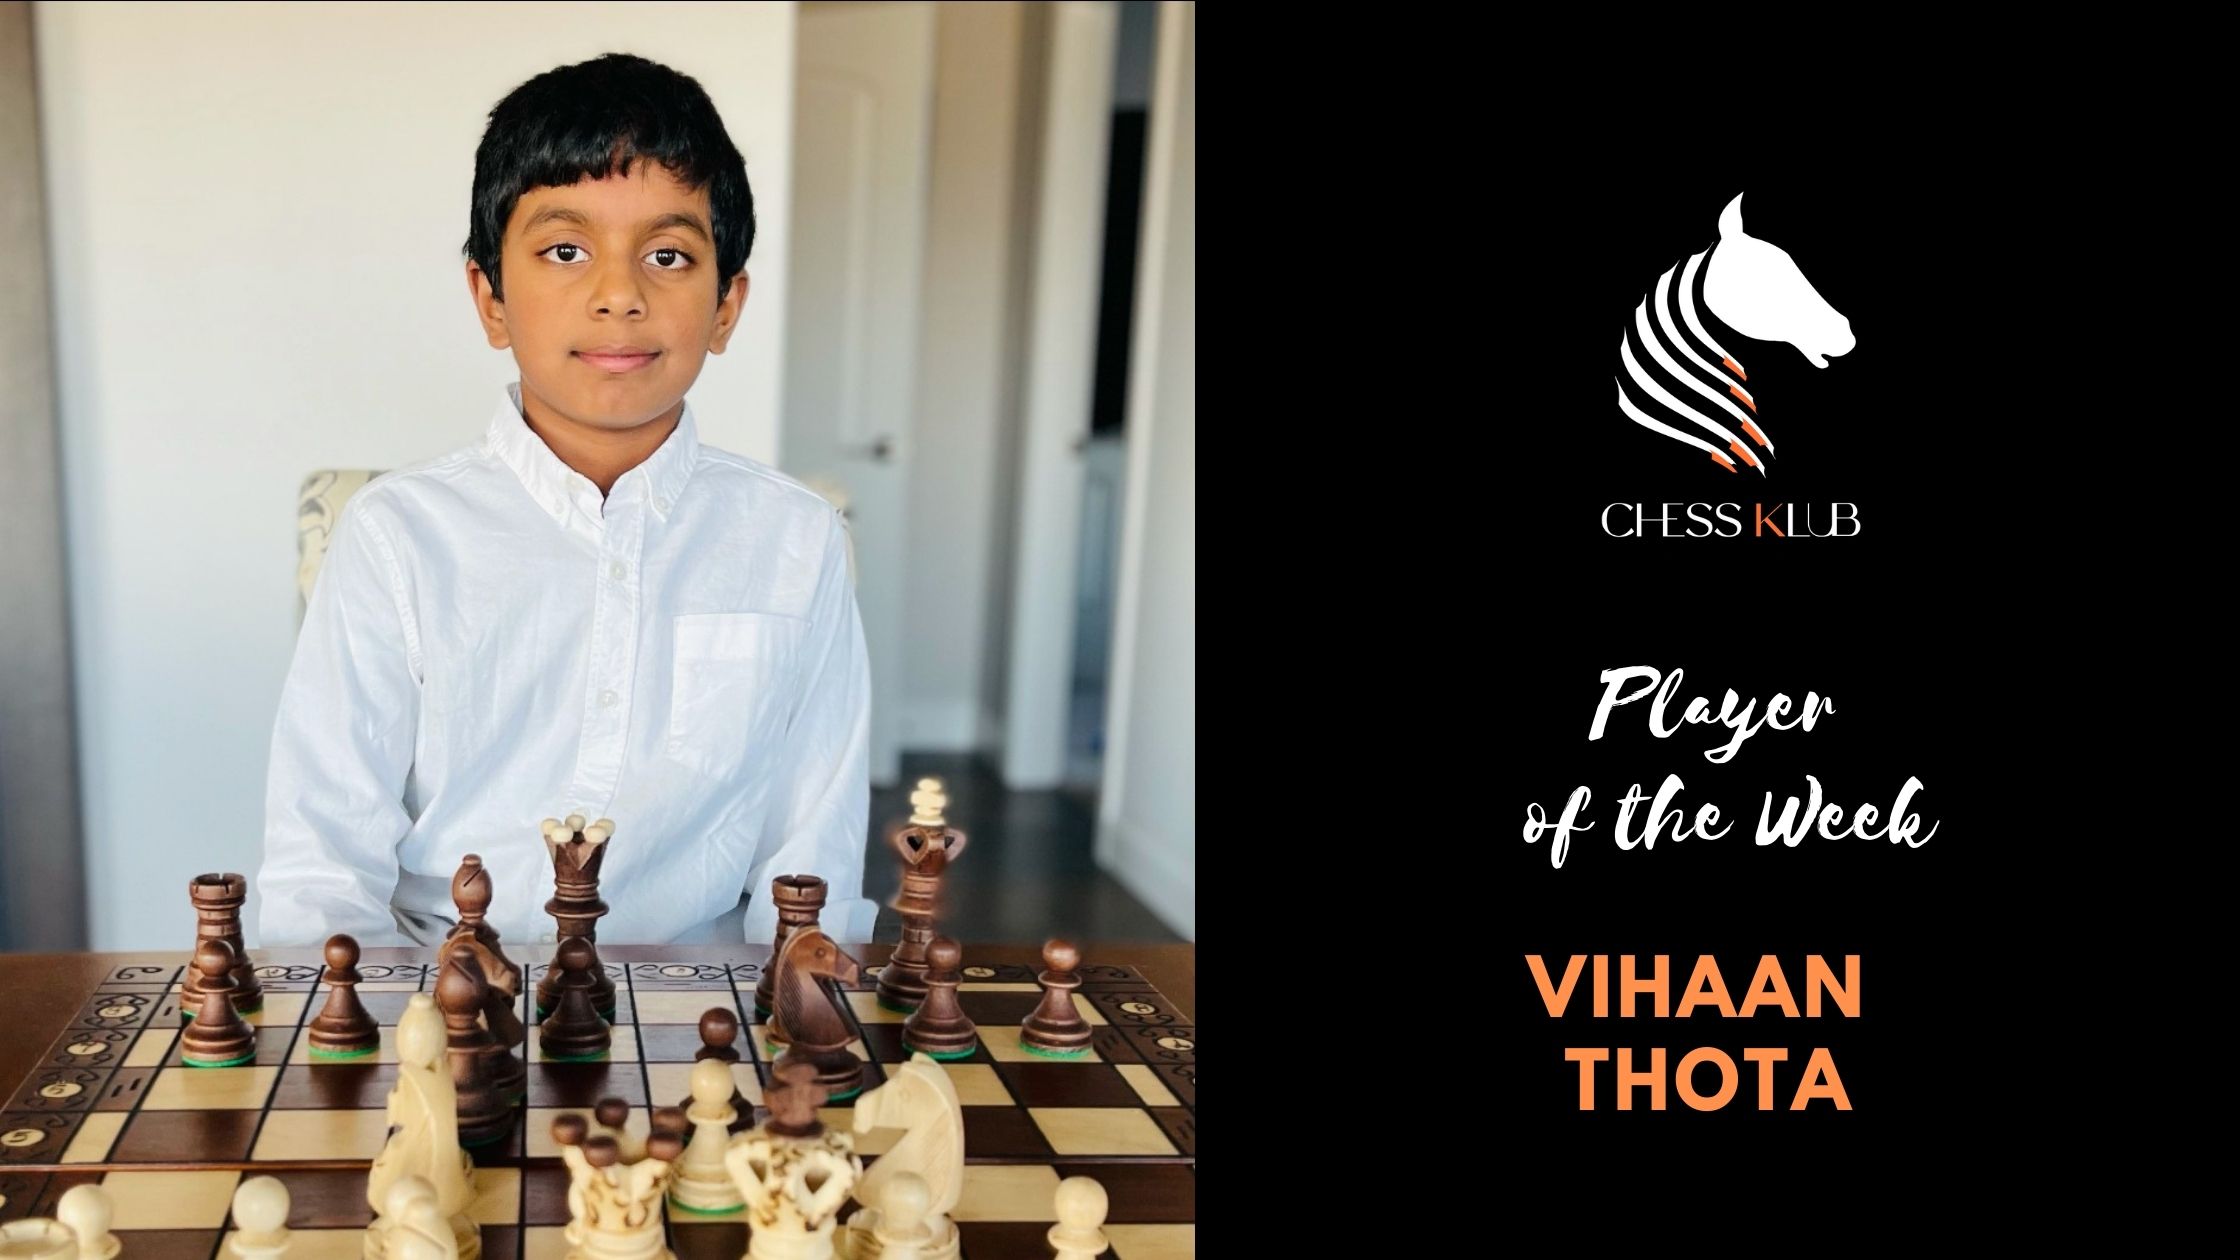 Vihan Thota - Champion of the Week